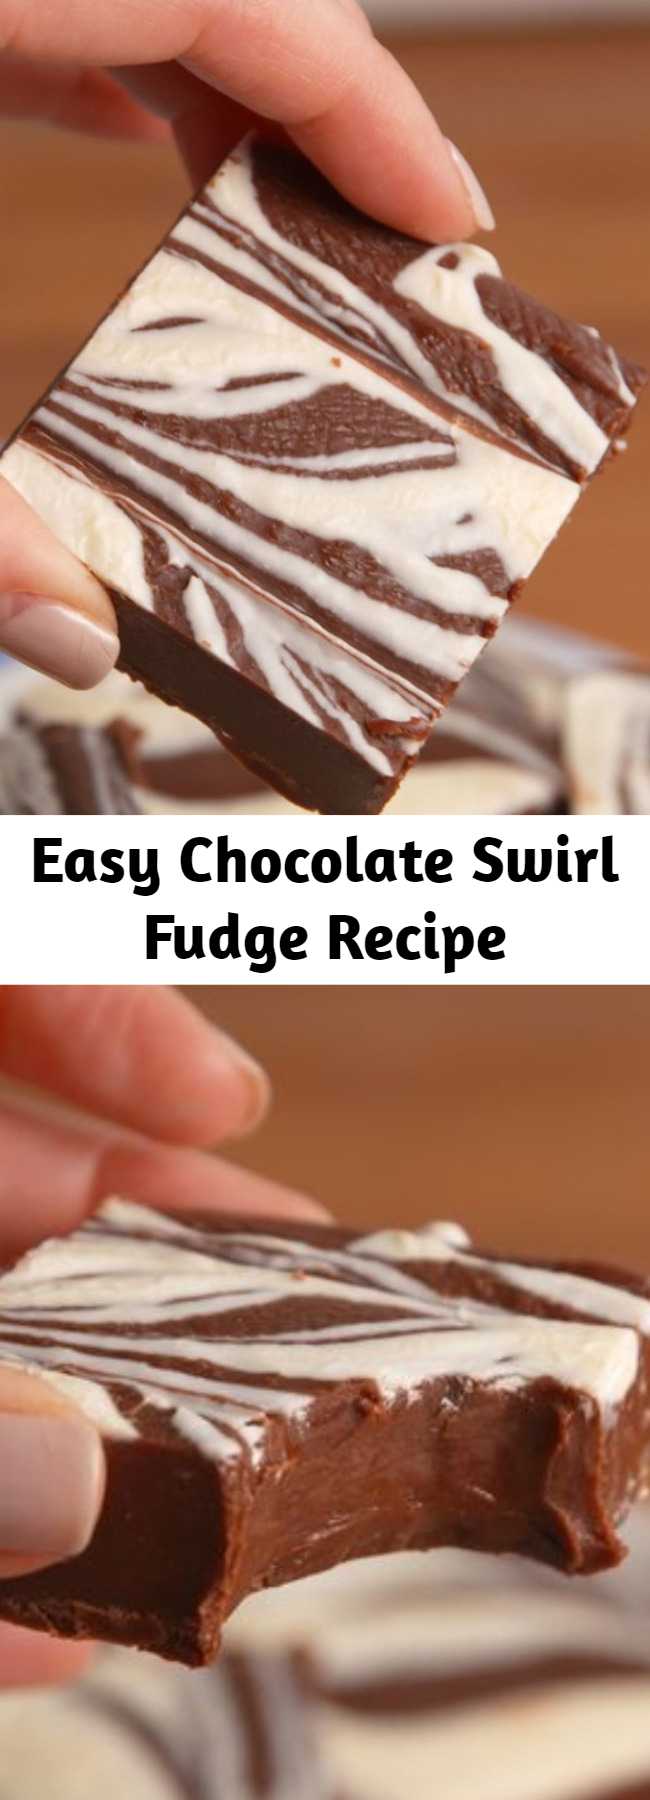 Easy Chocolate Swirl Fudge Recipe - Master this classic but surprisingly easy recipe for chocolate swirl fudge.